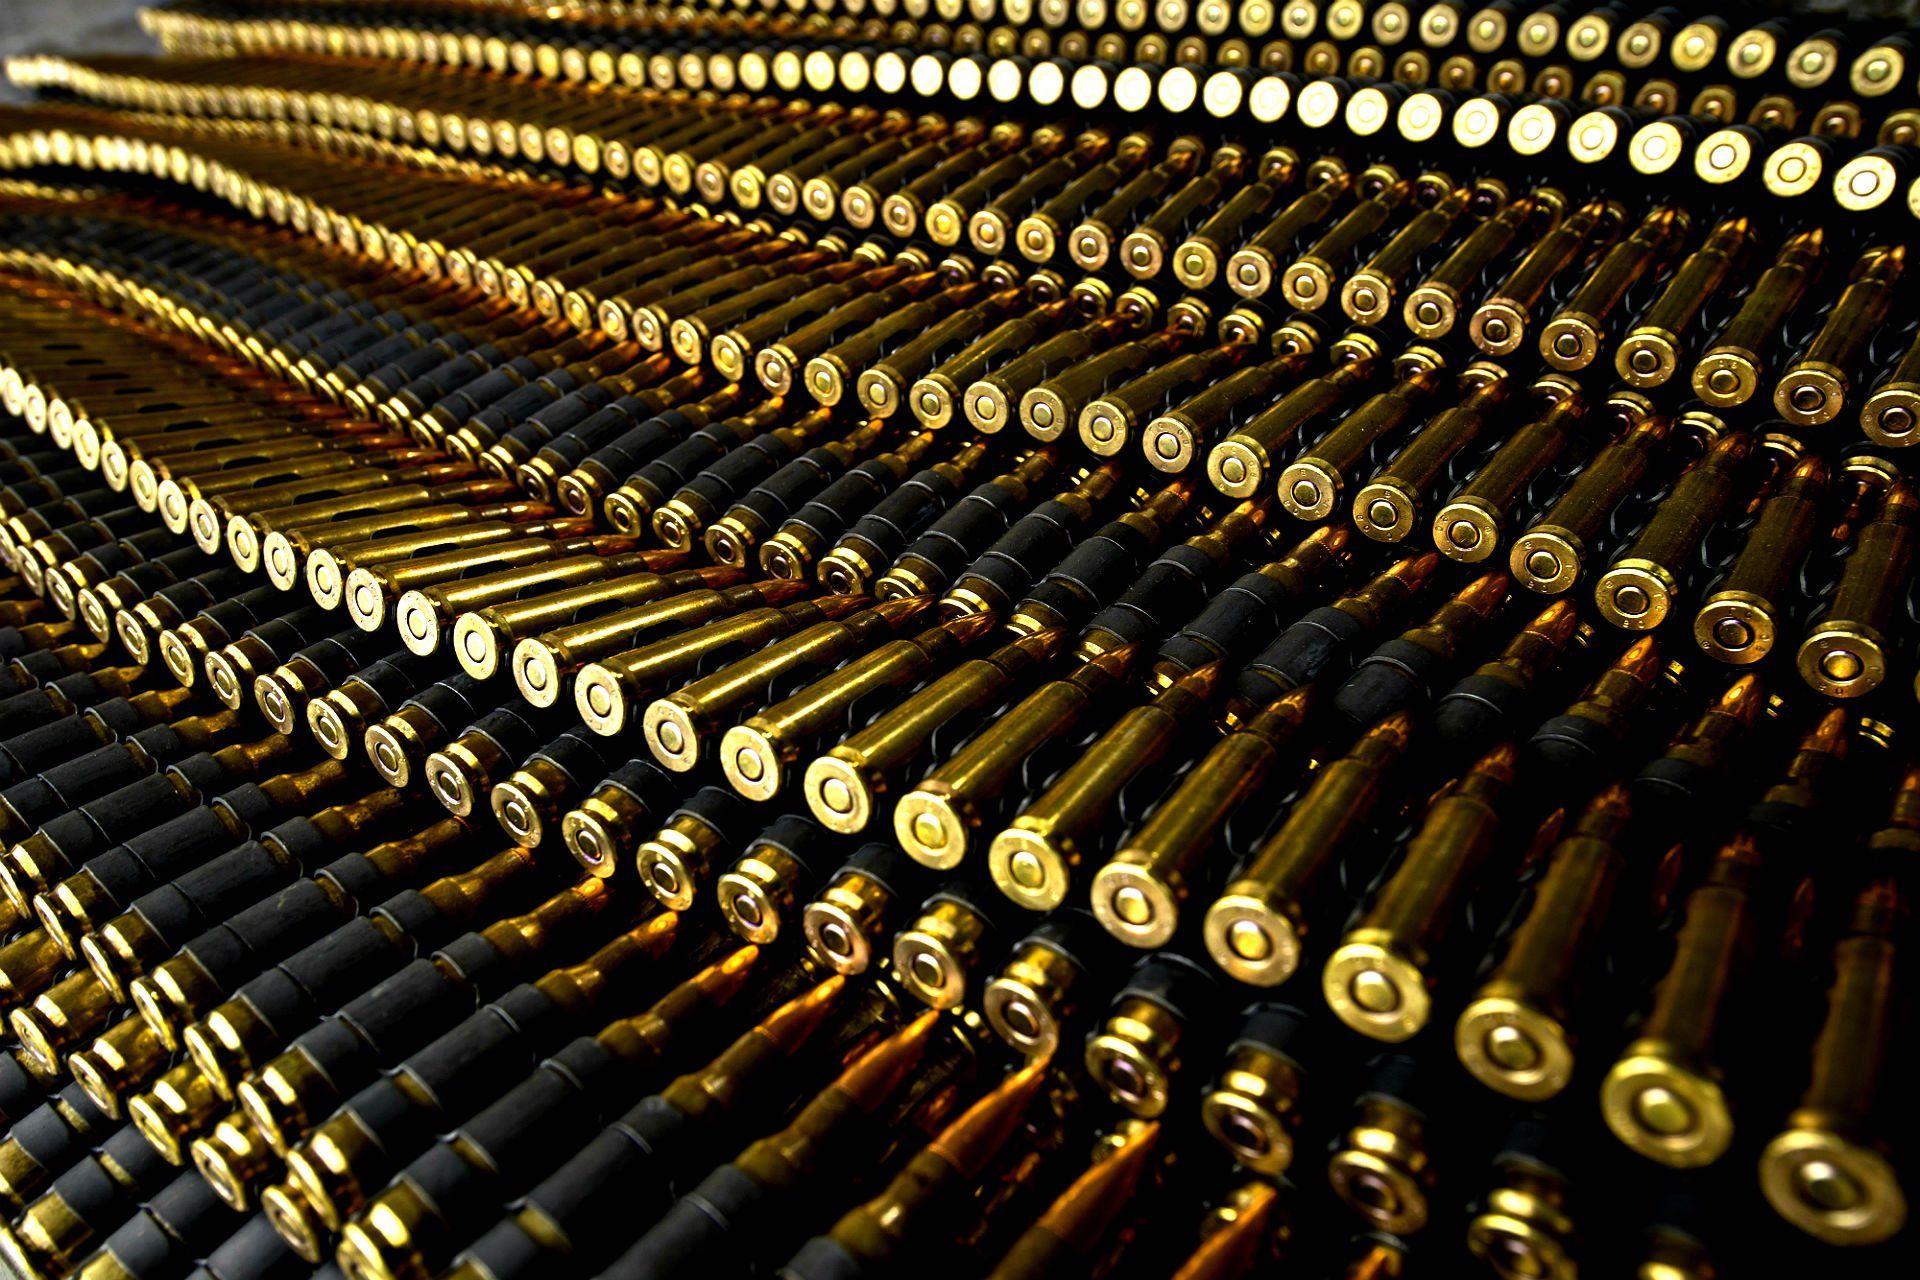 GUN CONTROL weapon politics anarchy protest political weapons guns ammo ammunition bullet wallpaperx1280